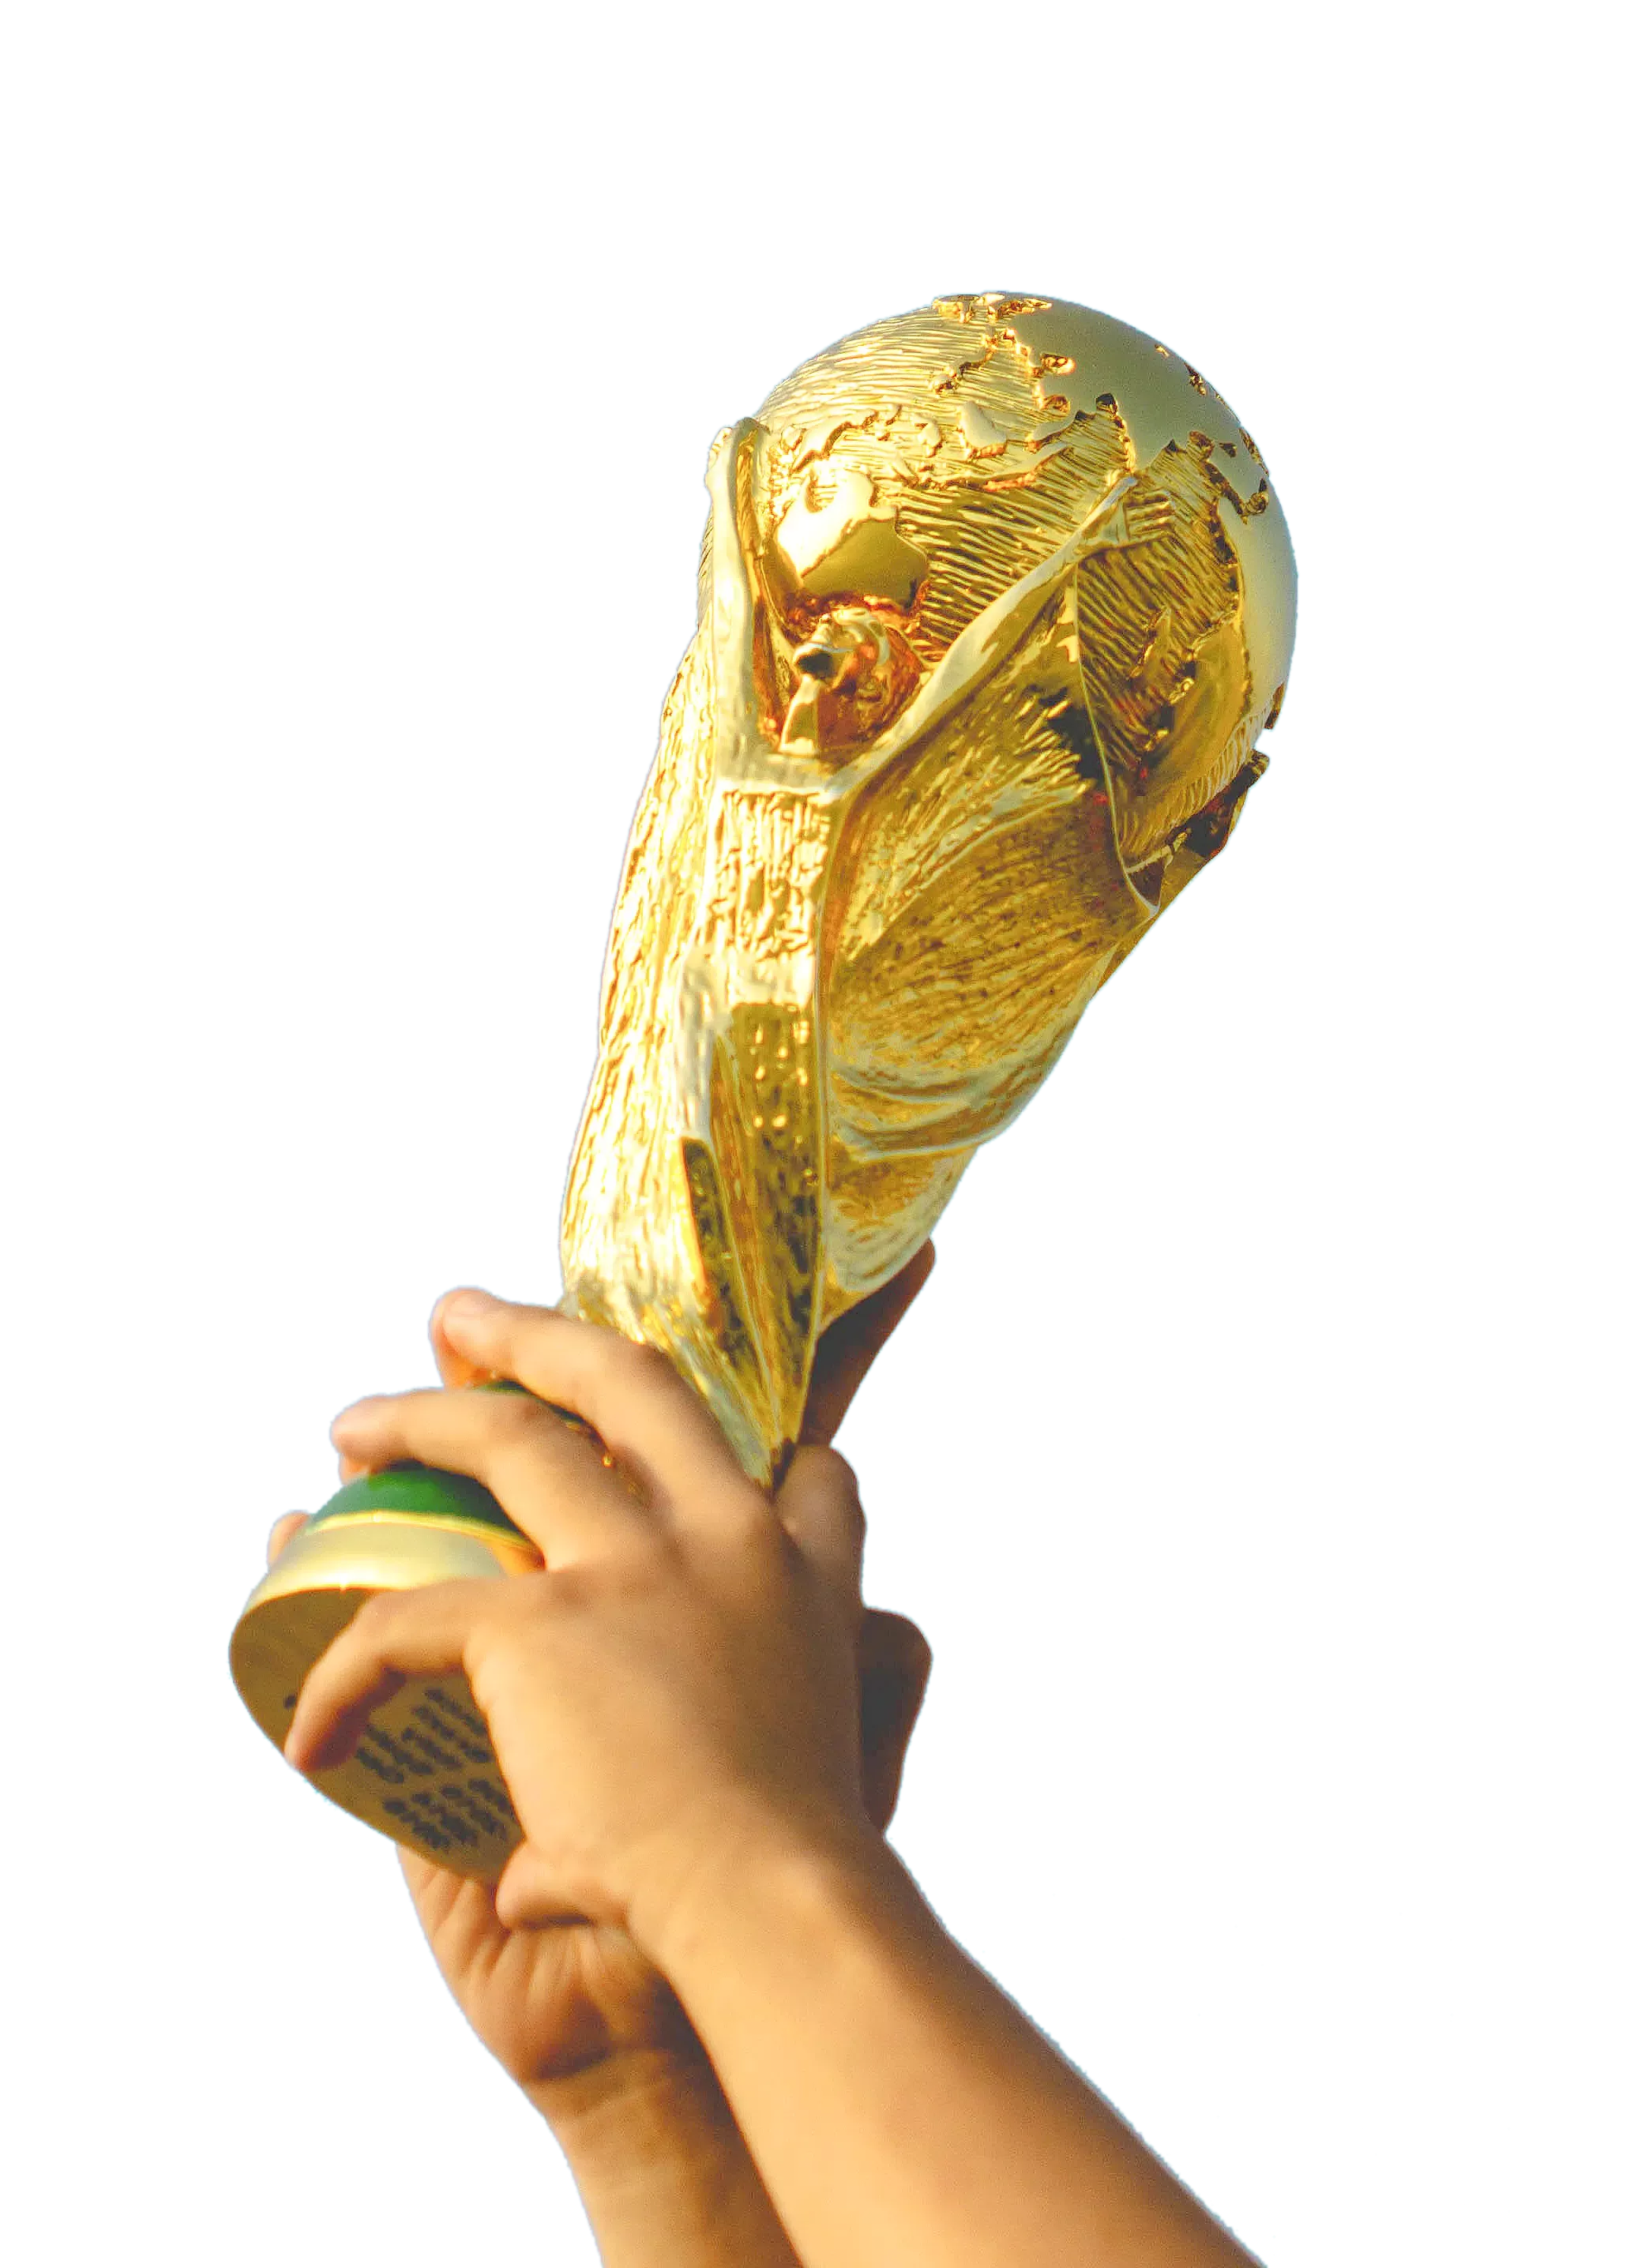 FIFA World Cup 2022™ survey trophy